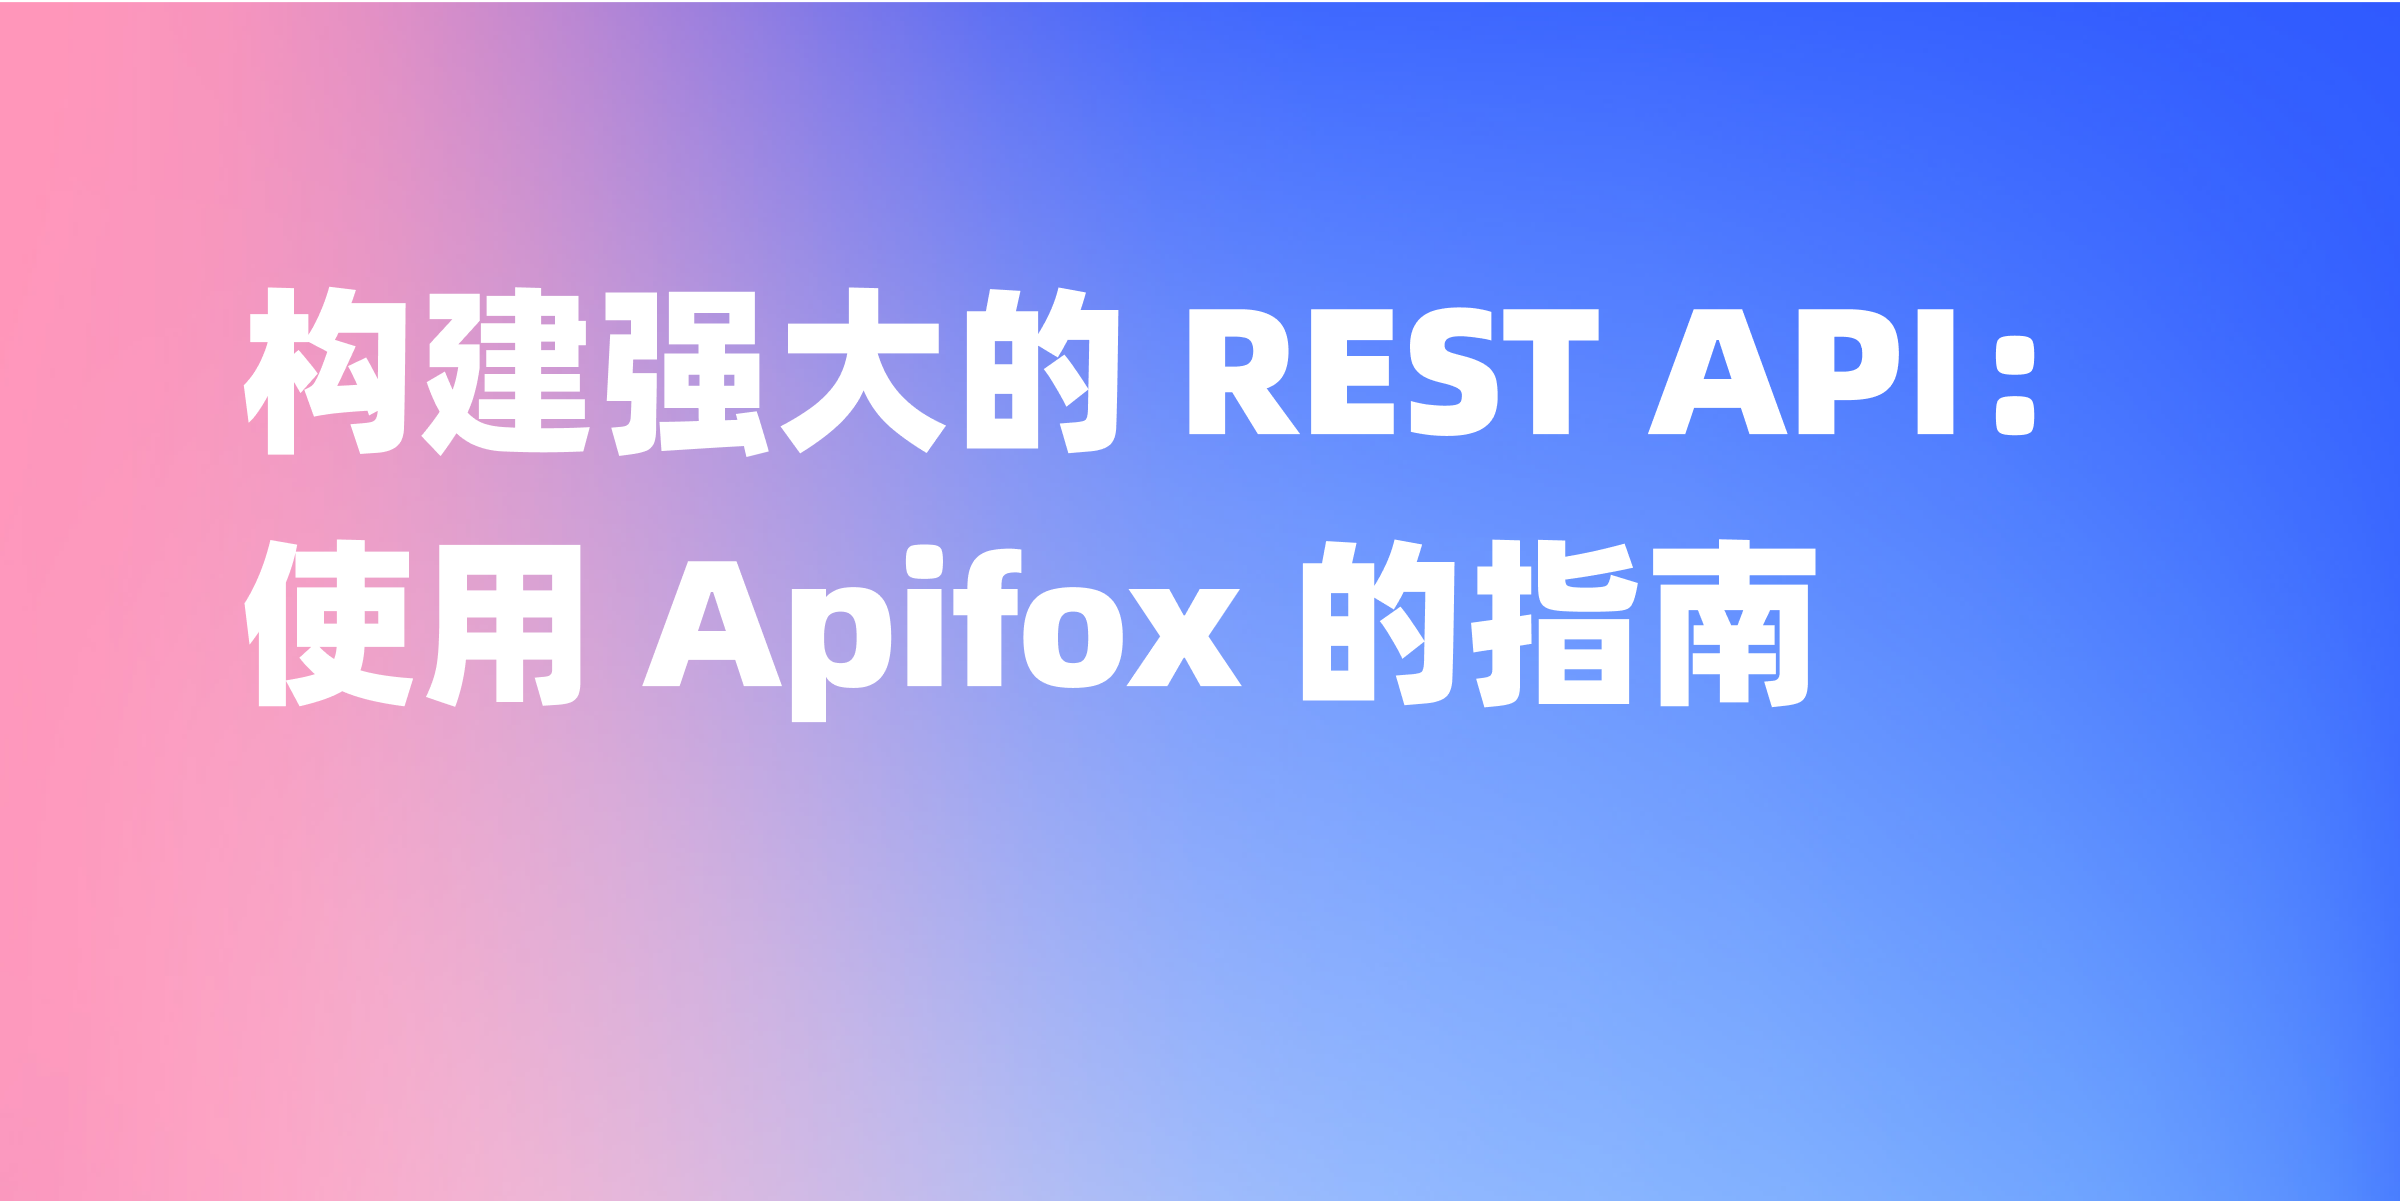 使用 Apifox 开发 REST API